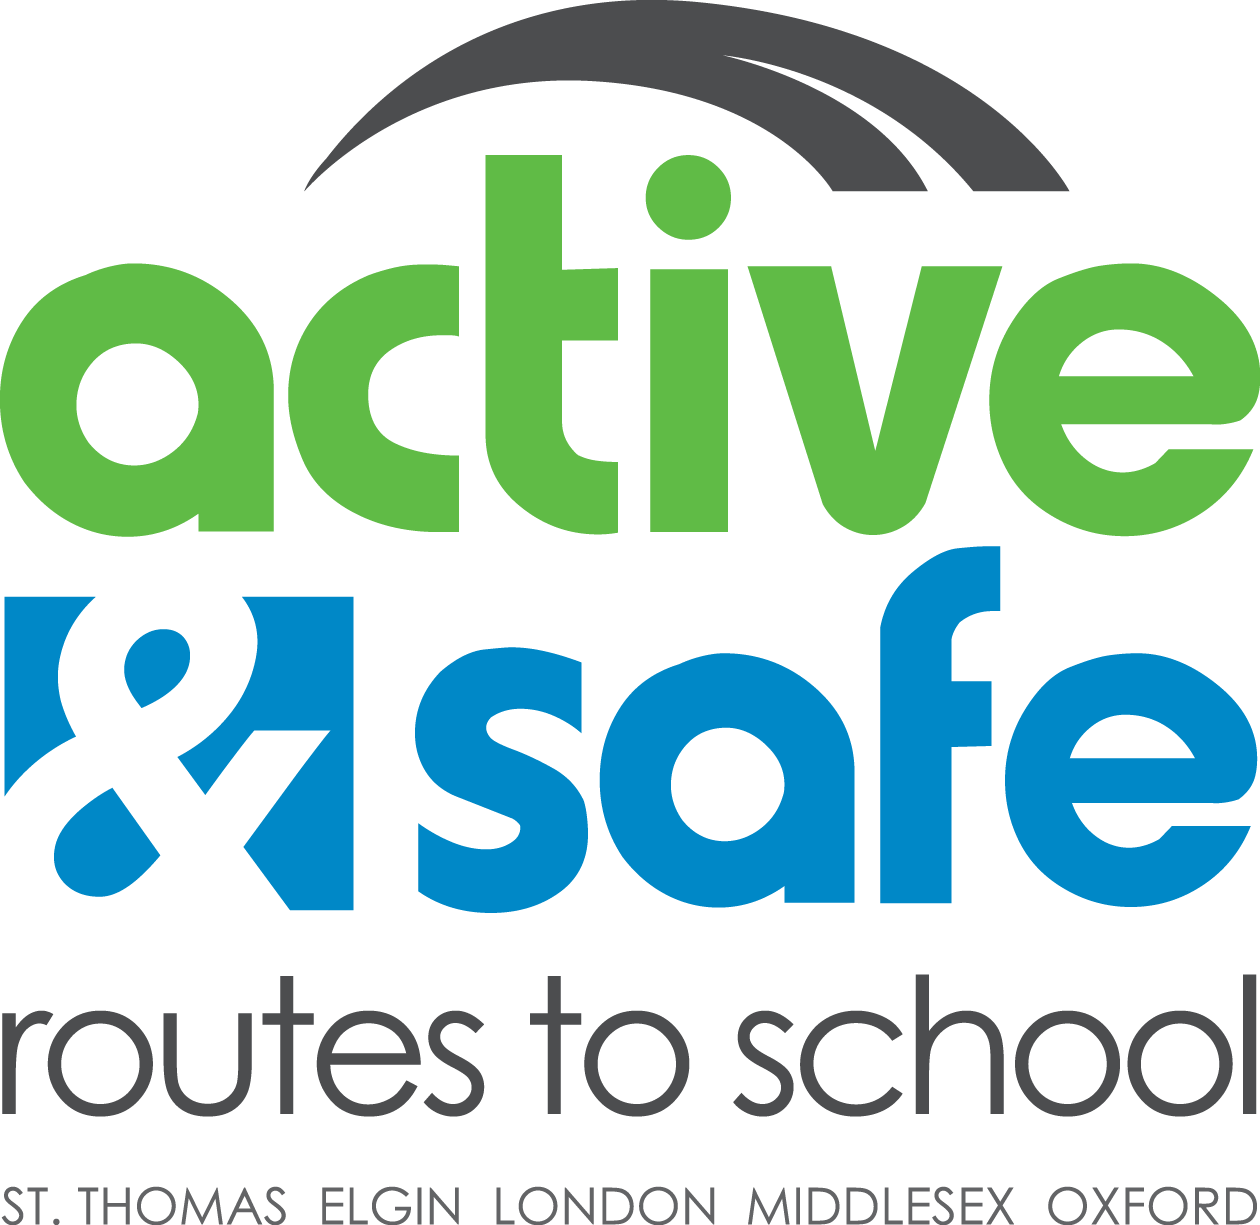 Active & Safe Routes to School (ELMO)